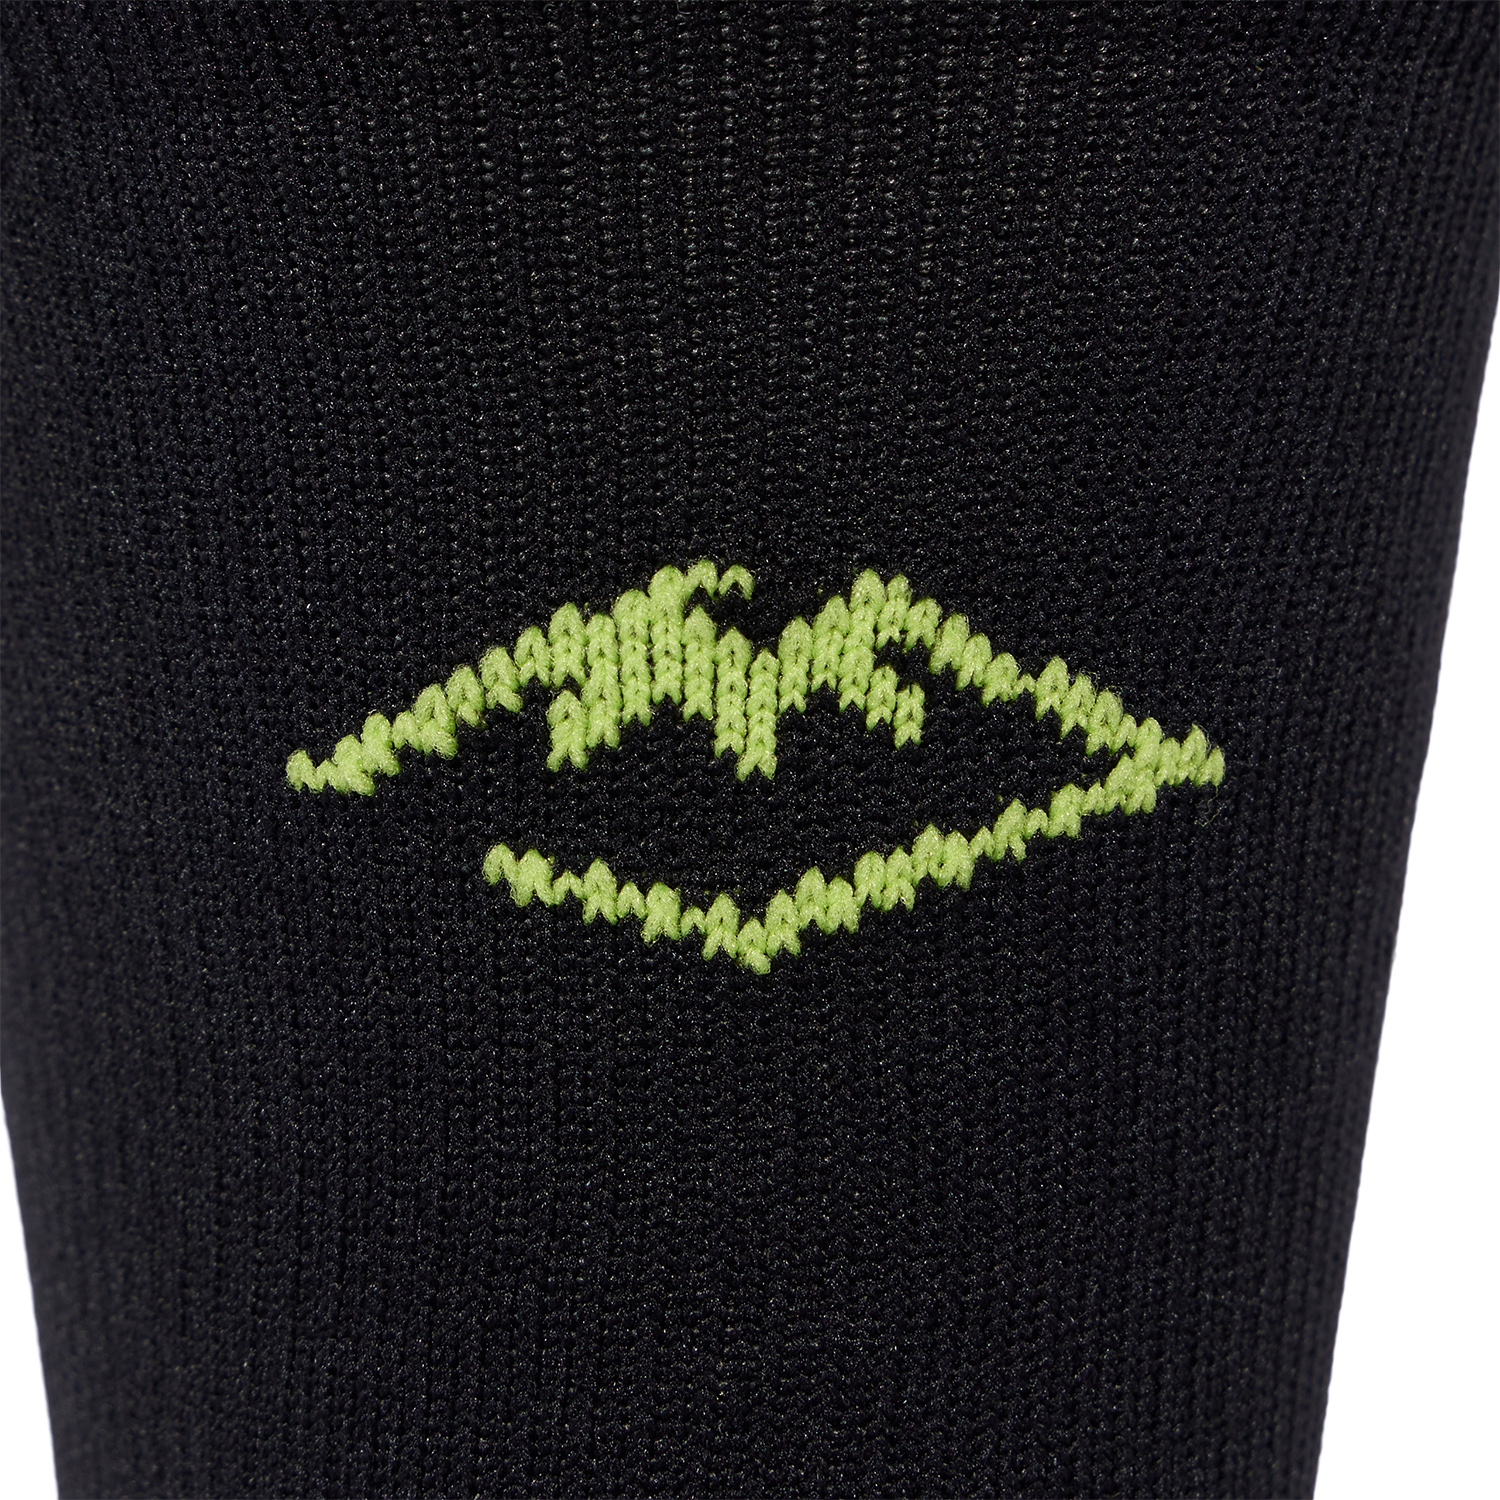 Asics Fujitrail Socks - Performance Black/Illuminate Green